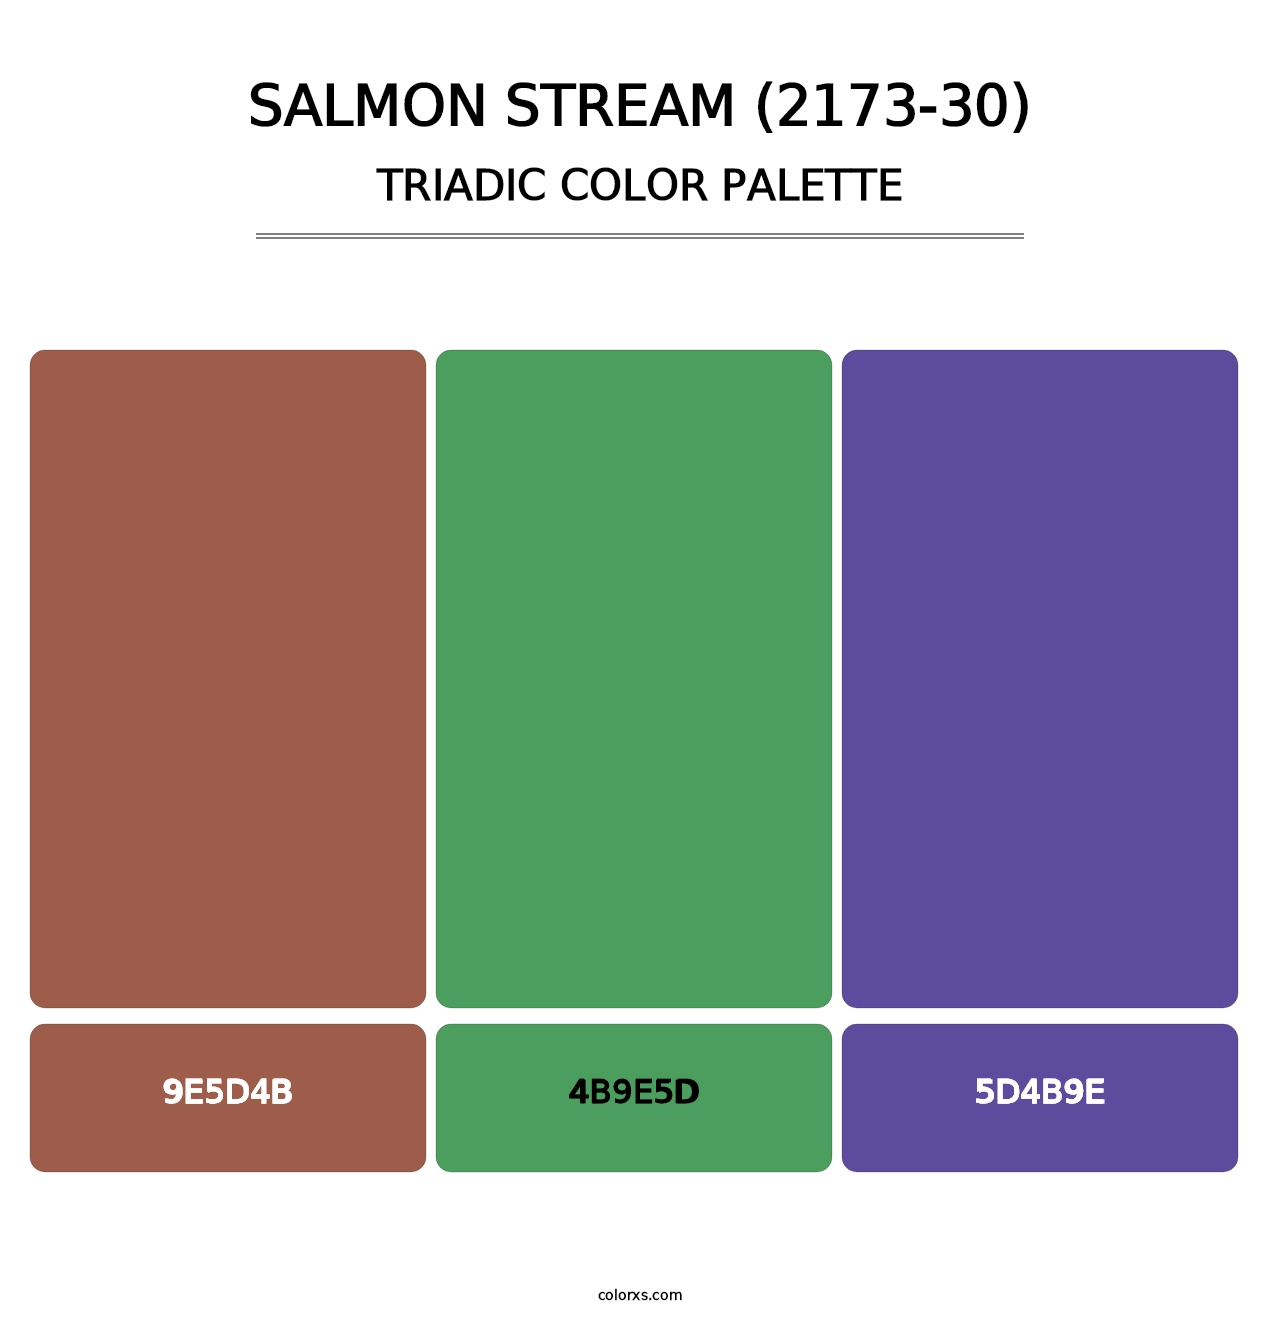 Salmon Stream (2173-30) - Triadic Color Palette